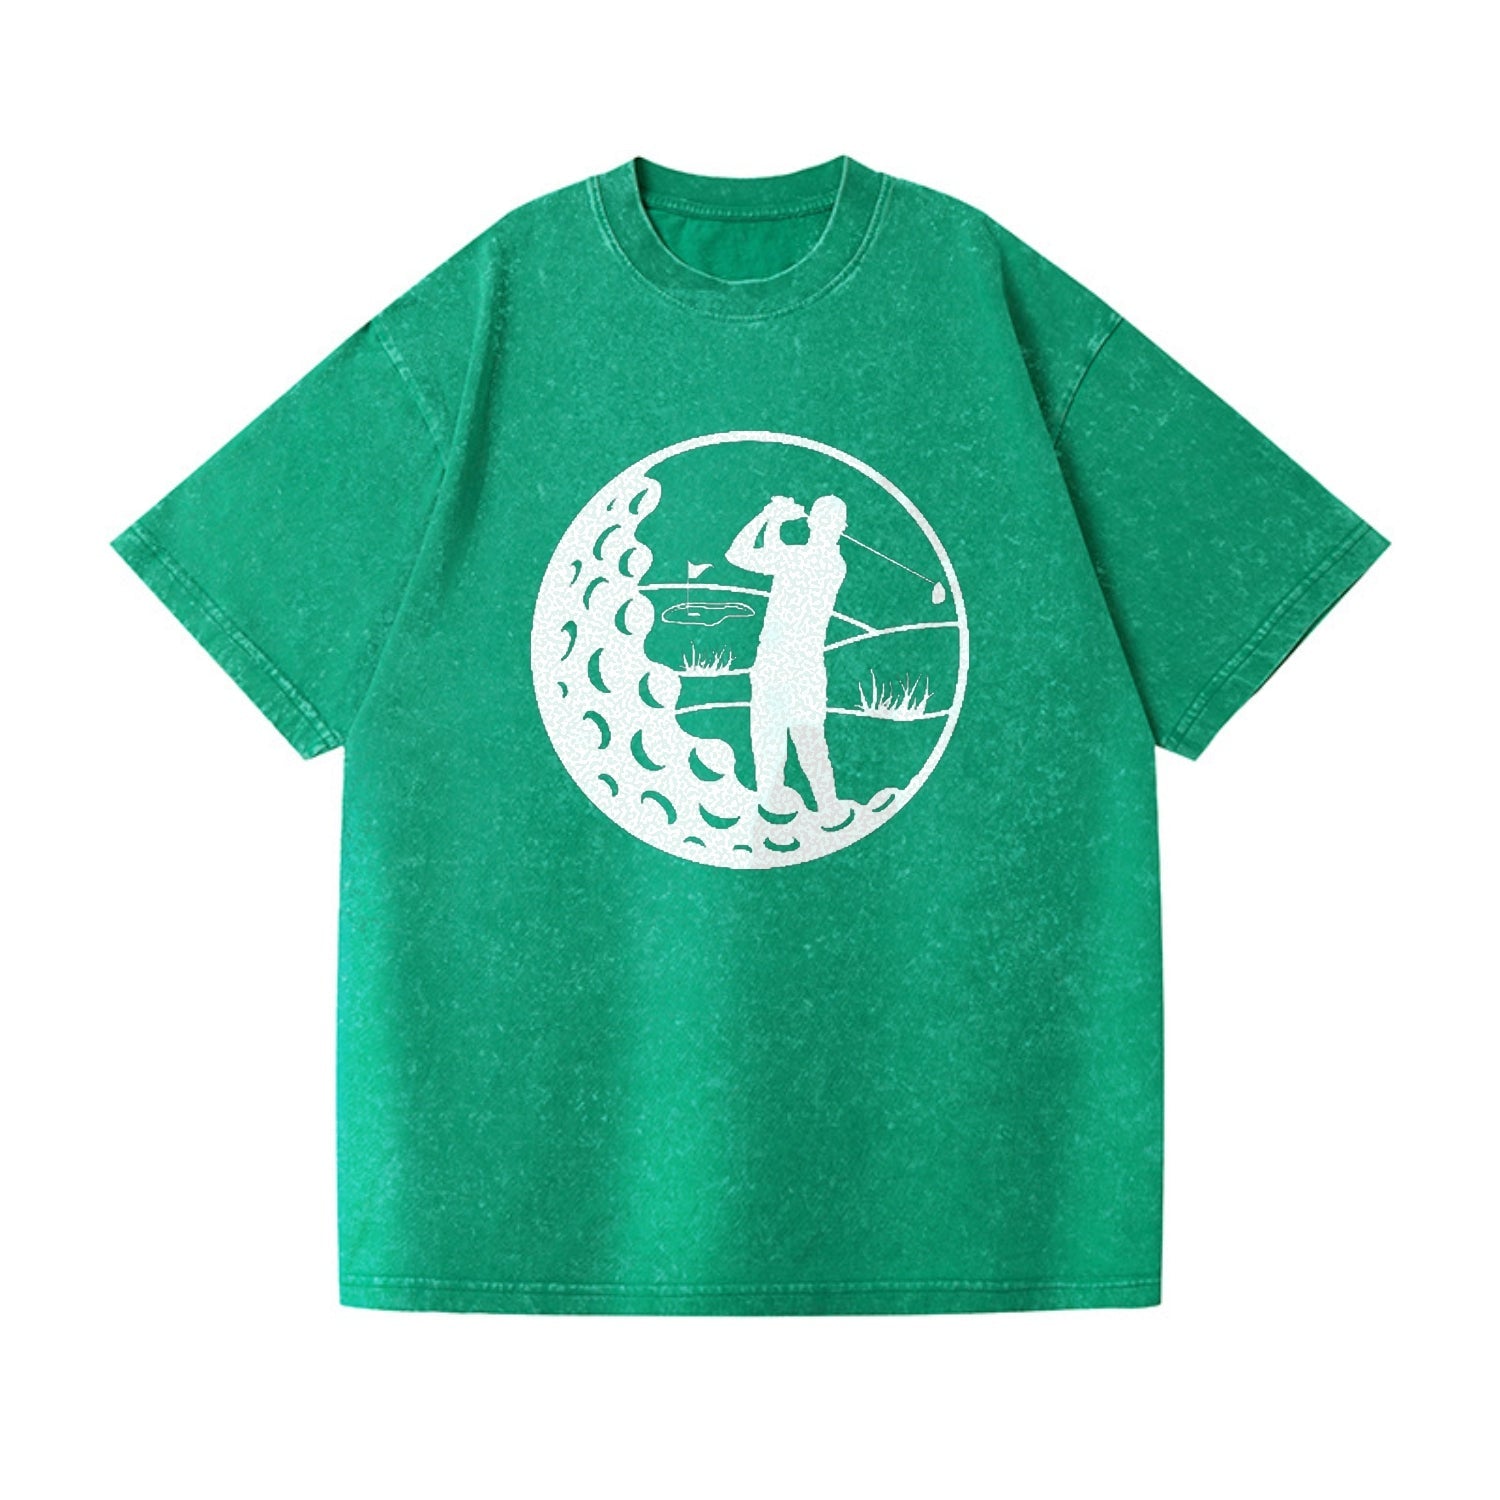 Golf World 1 Vintage T-shirt